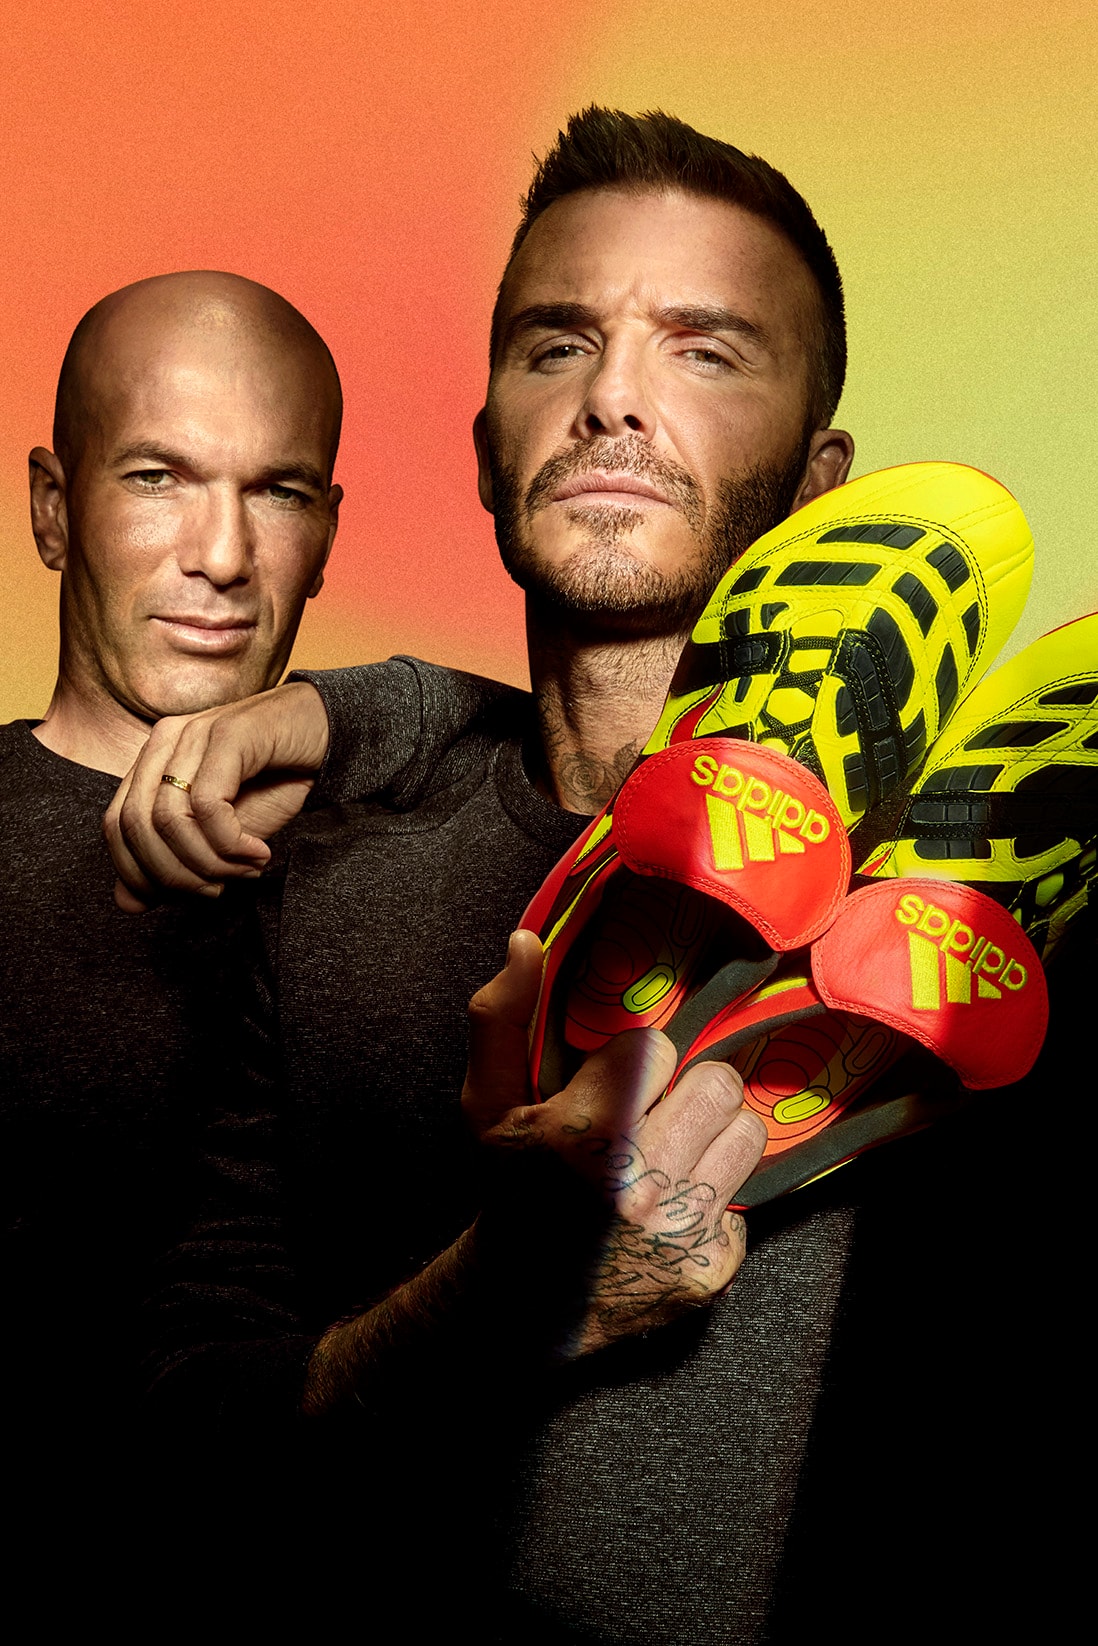 adidas David Beckham Zinedine Zidane Predator Accelerator Release Details Cop Purchase Buy Kicks Shoes Trainers Boots Footwear 2018 FIFA World Cup